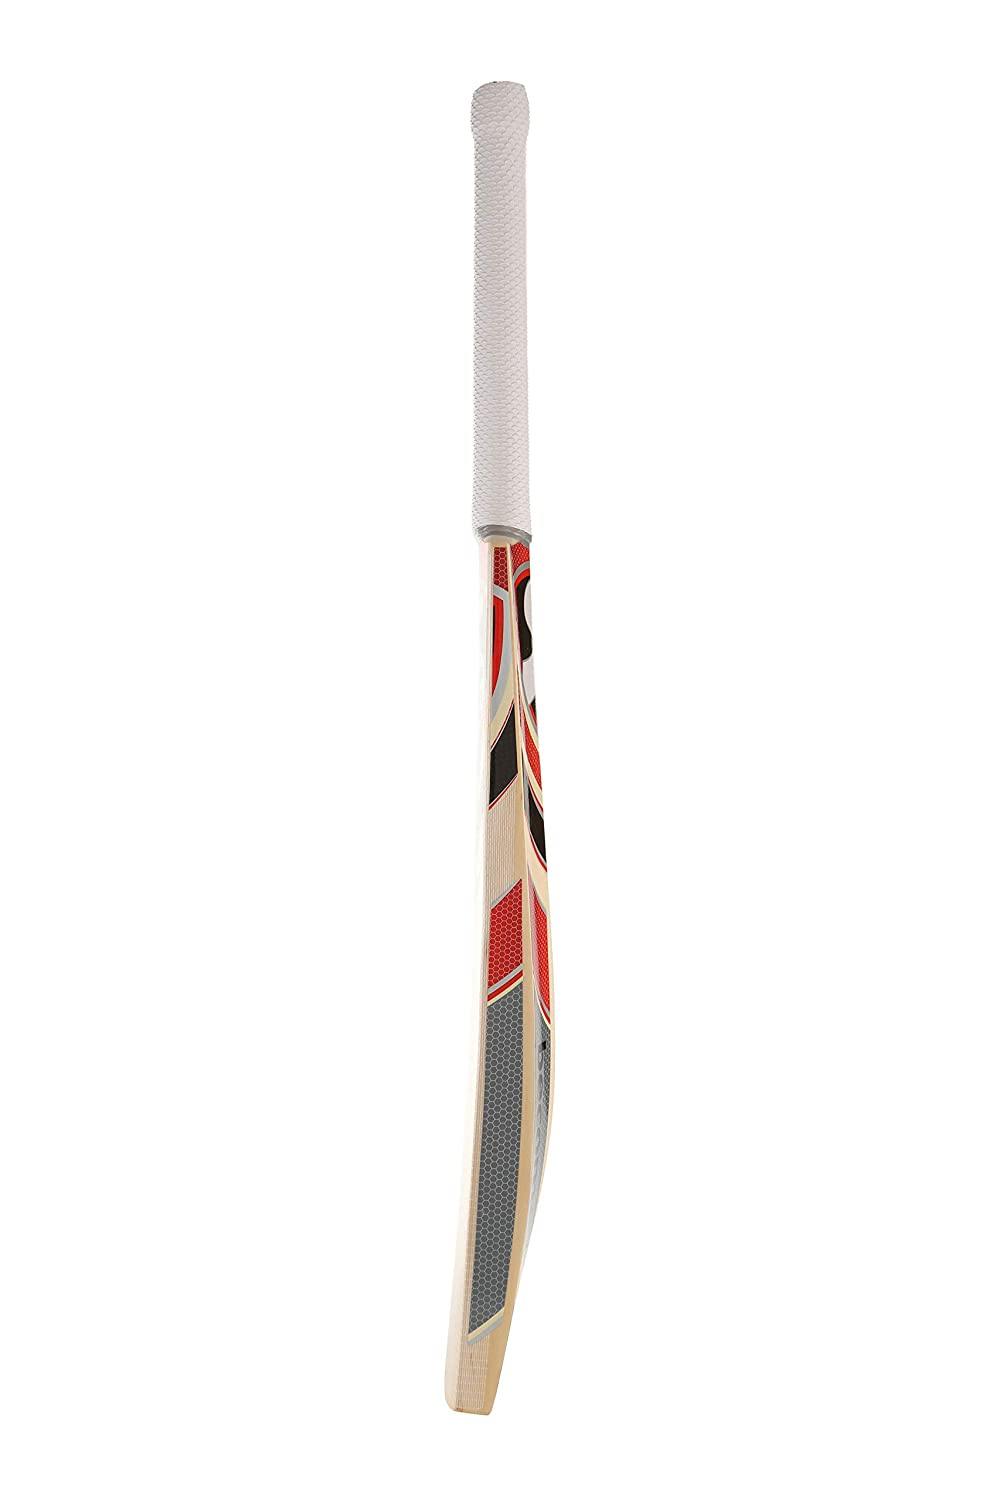 SG Sierra 150 Grade 5 English Willow Cricket Bat - Best Price online Prokicksports.com